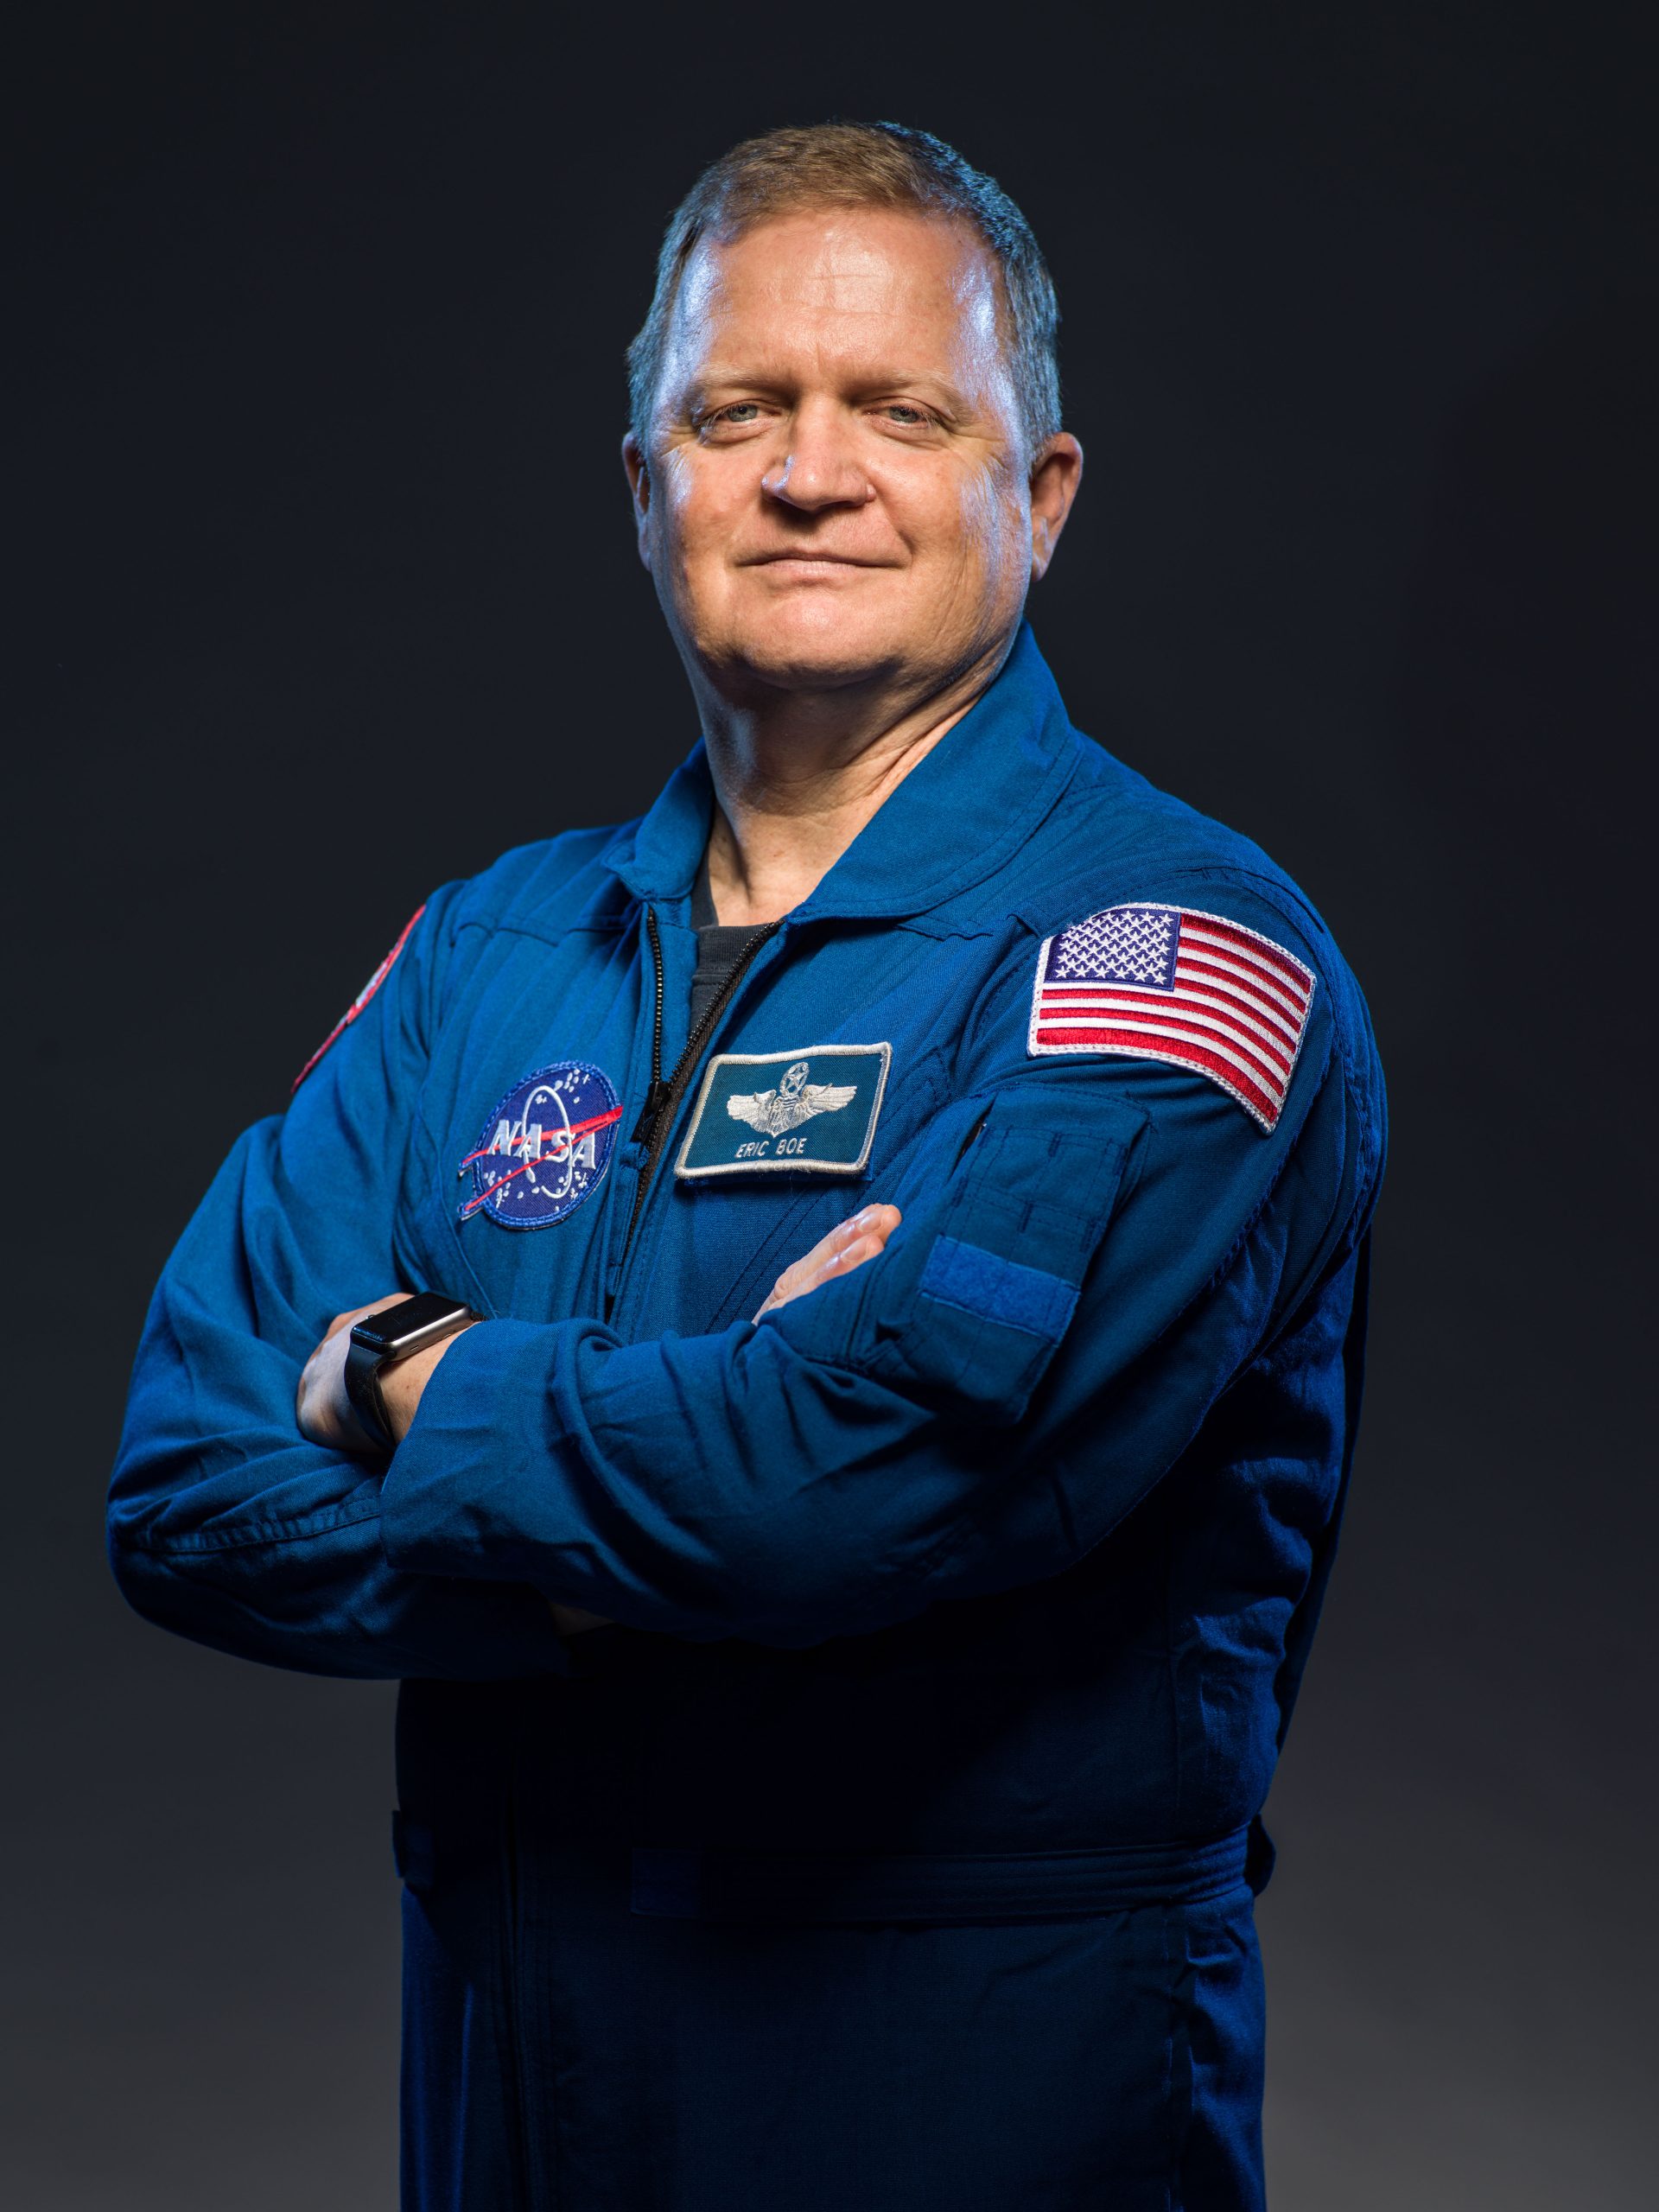 Eric Boe astronaut portrait 